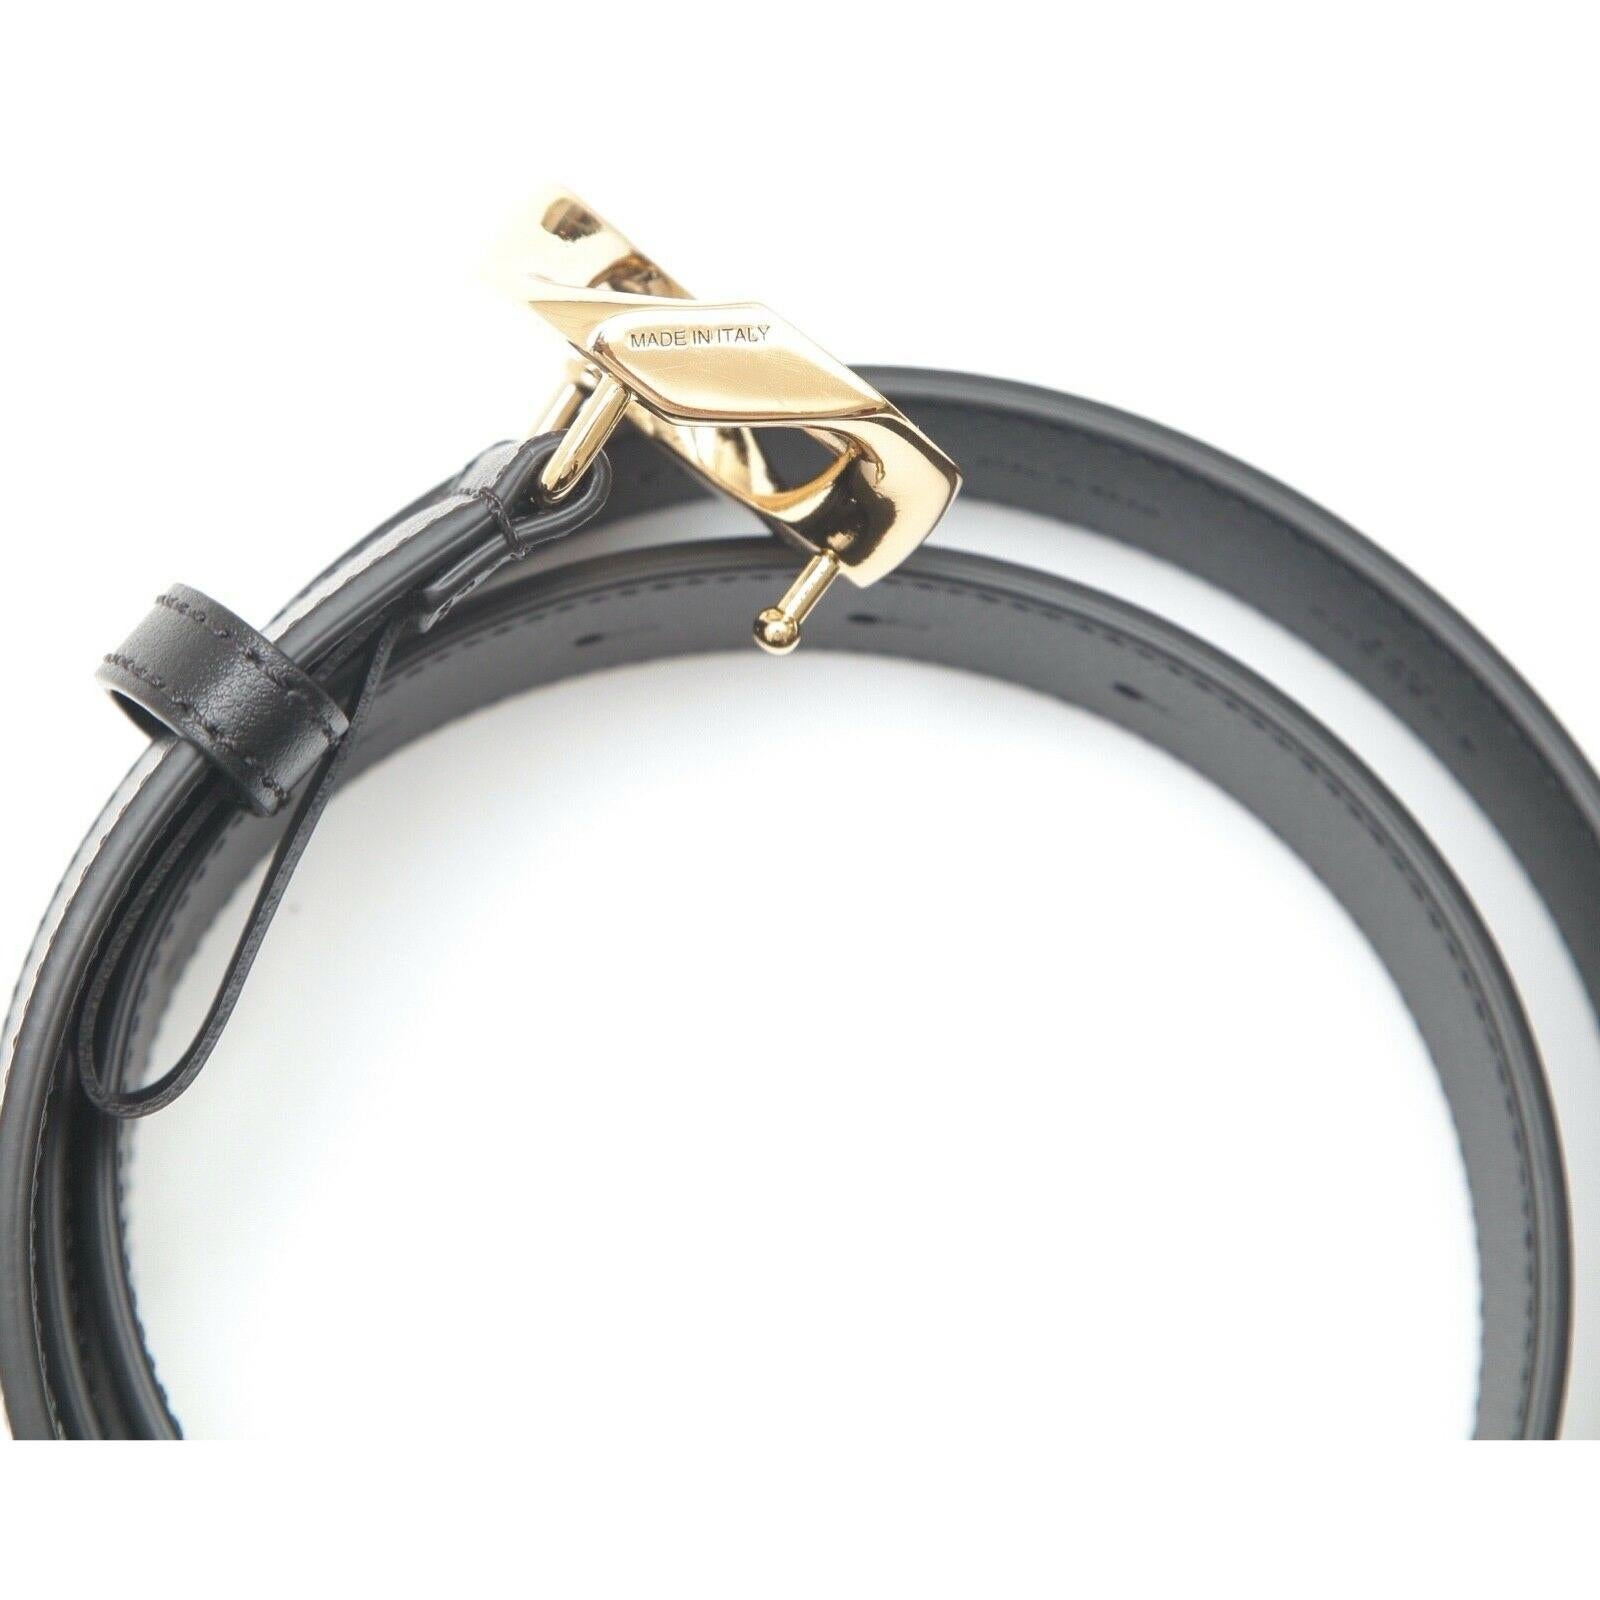 turn-lock skinny leather belt